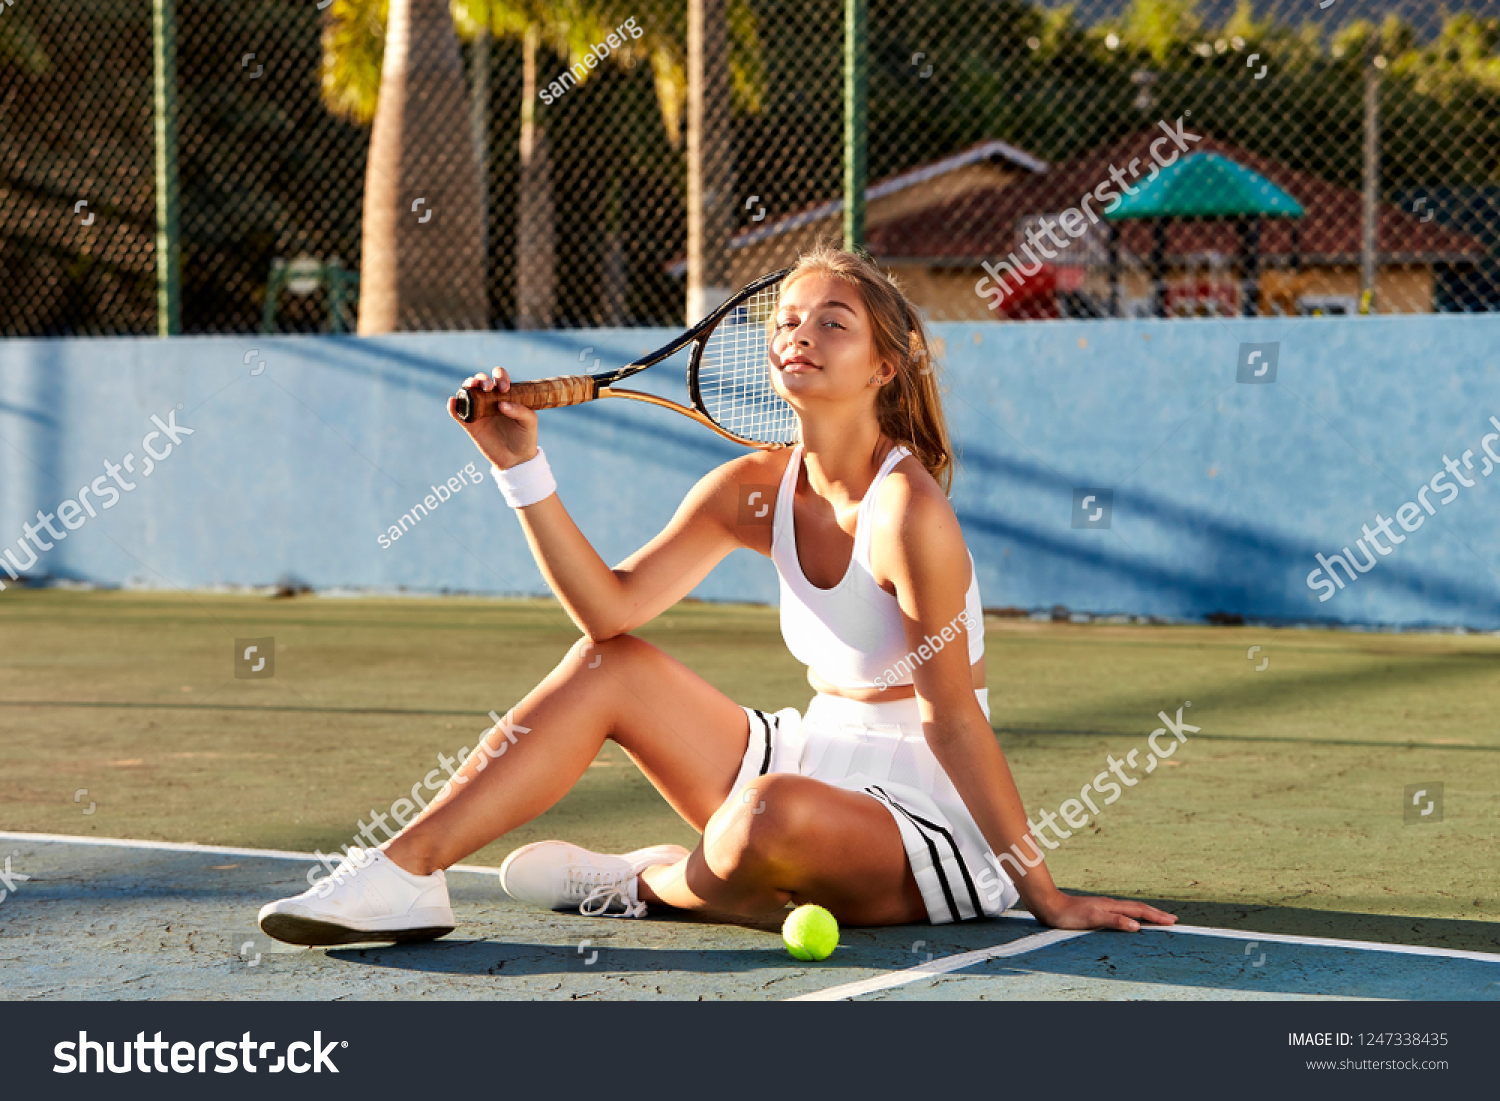 Tennis Babe Pics